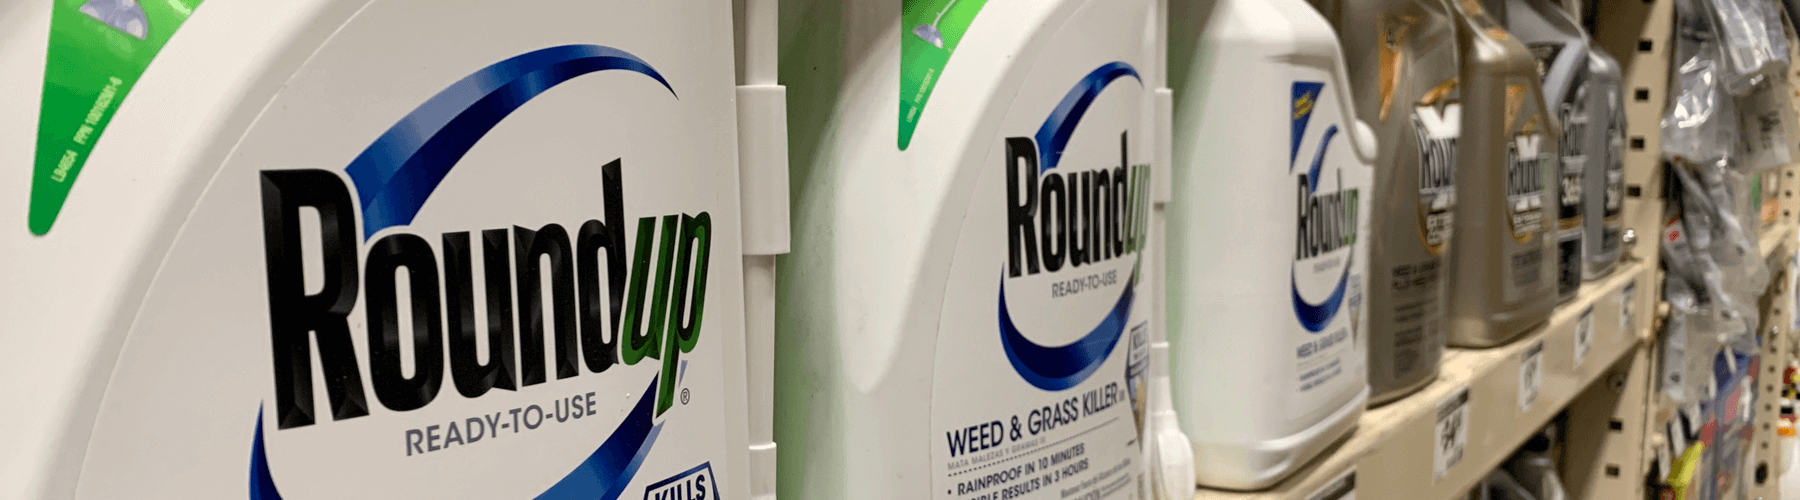 Roundup weed killer